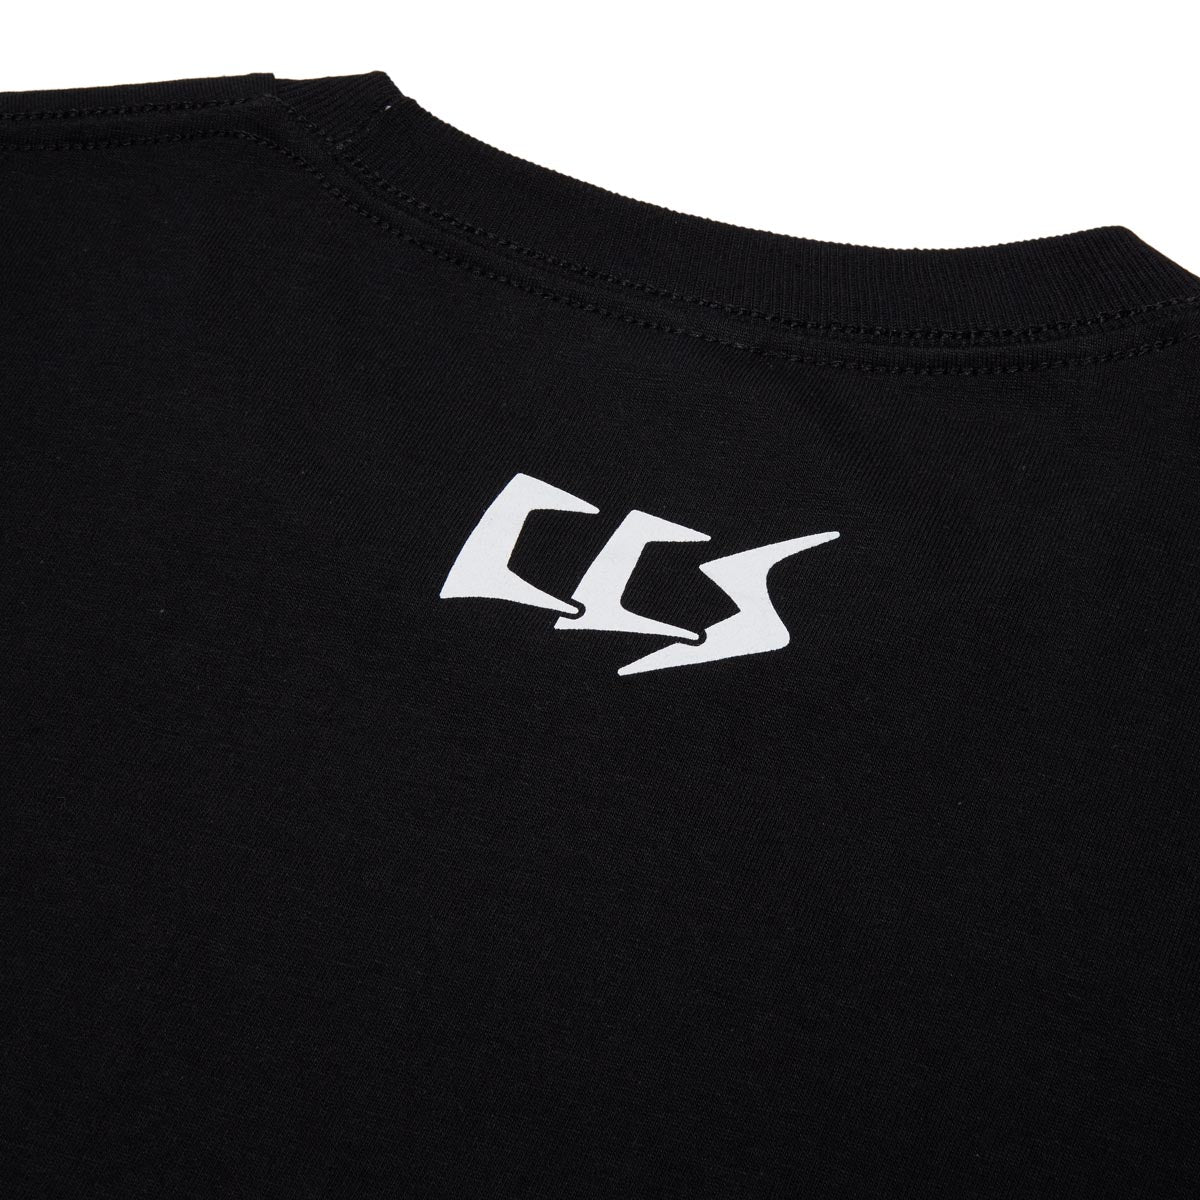 CCS OG Punk T-Shirt - Black/Green image 4